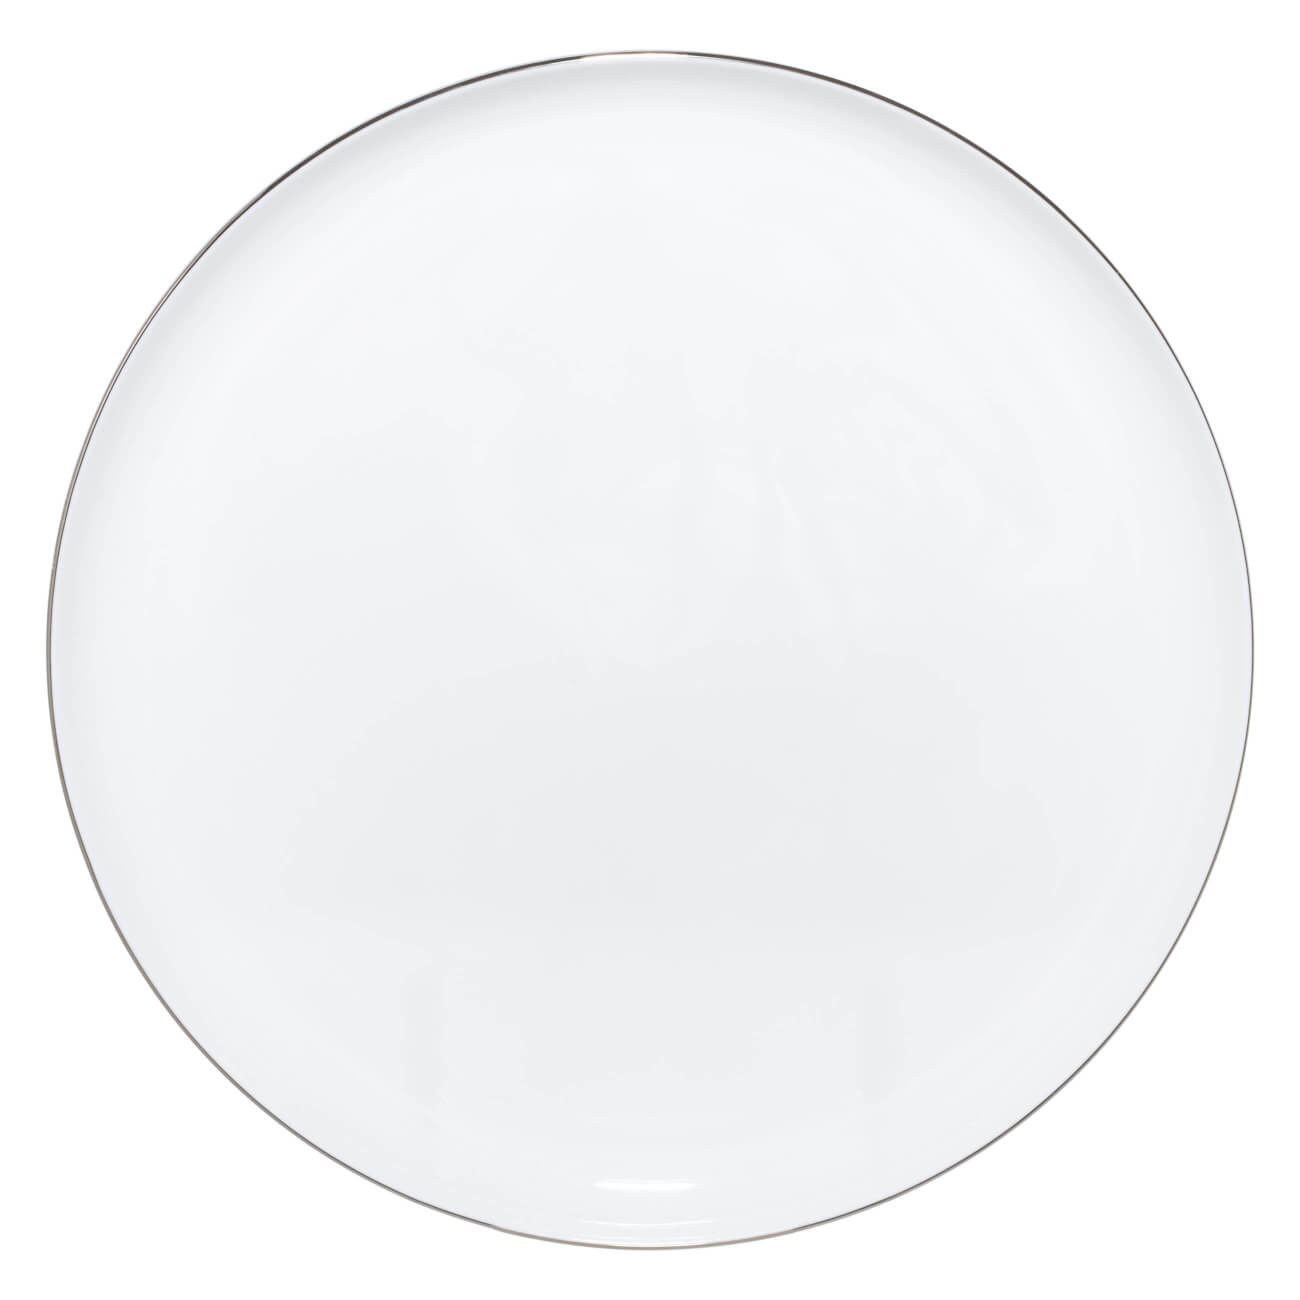 Тарелка обеденная, 28 см, фарфор F, Antarctica тарелка обеденная керамика 26 см круглая verde бежевый daniks st2155